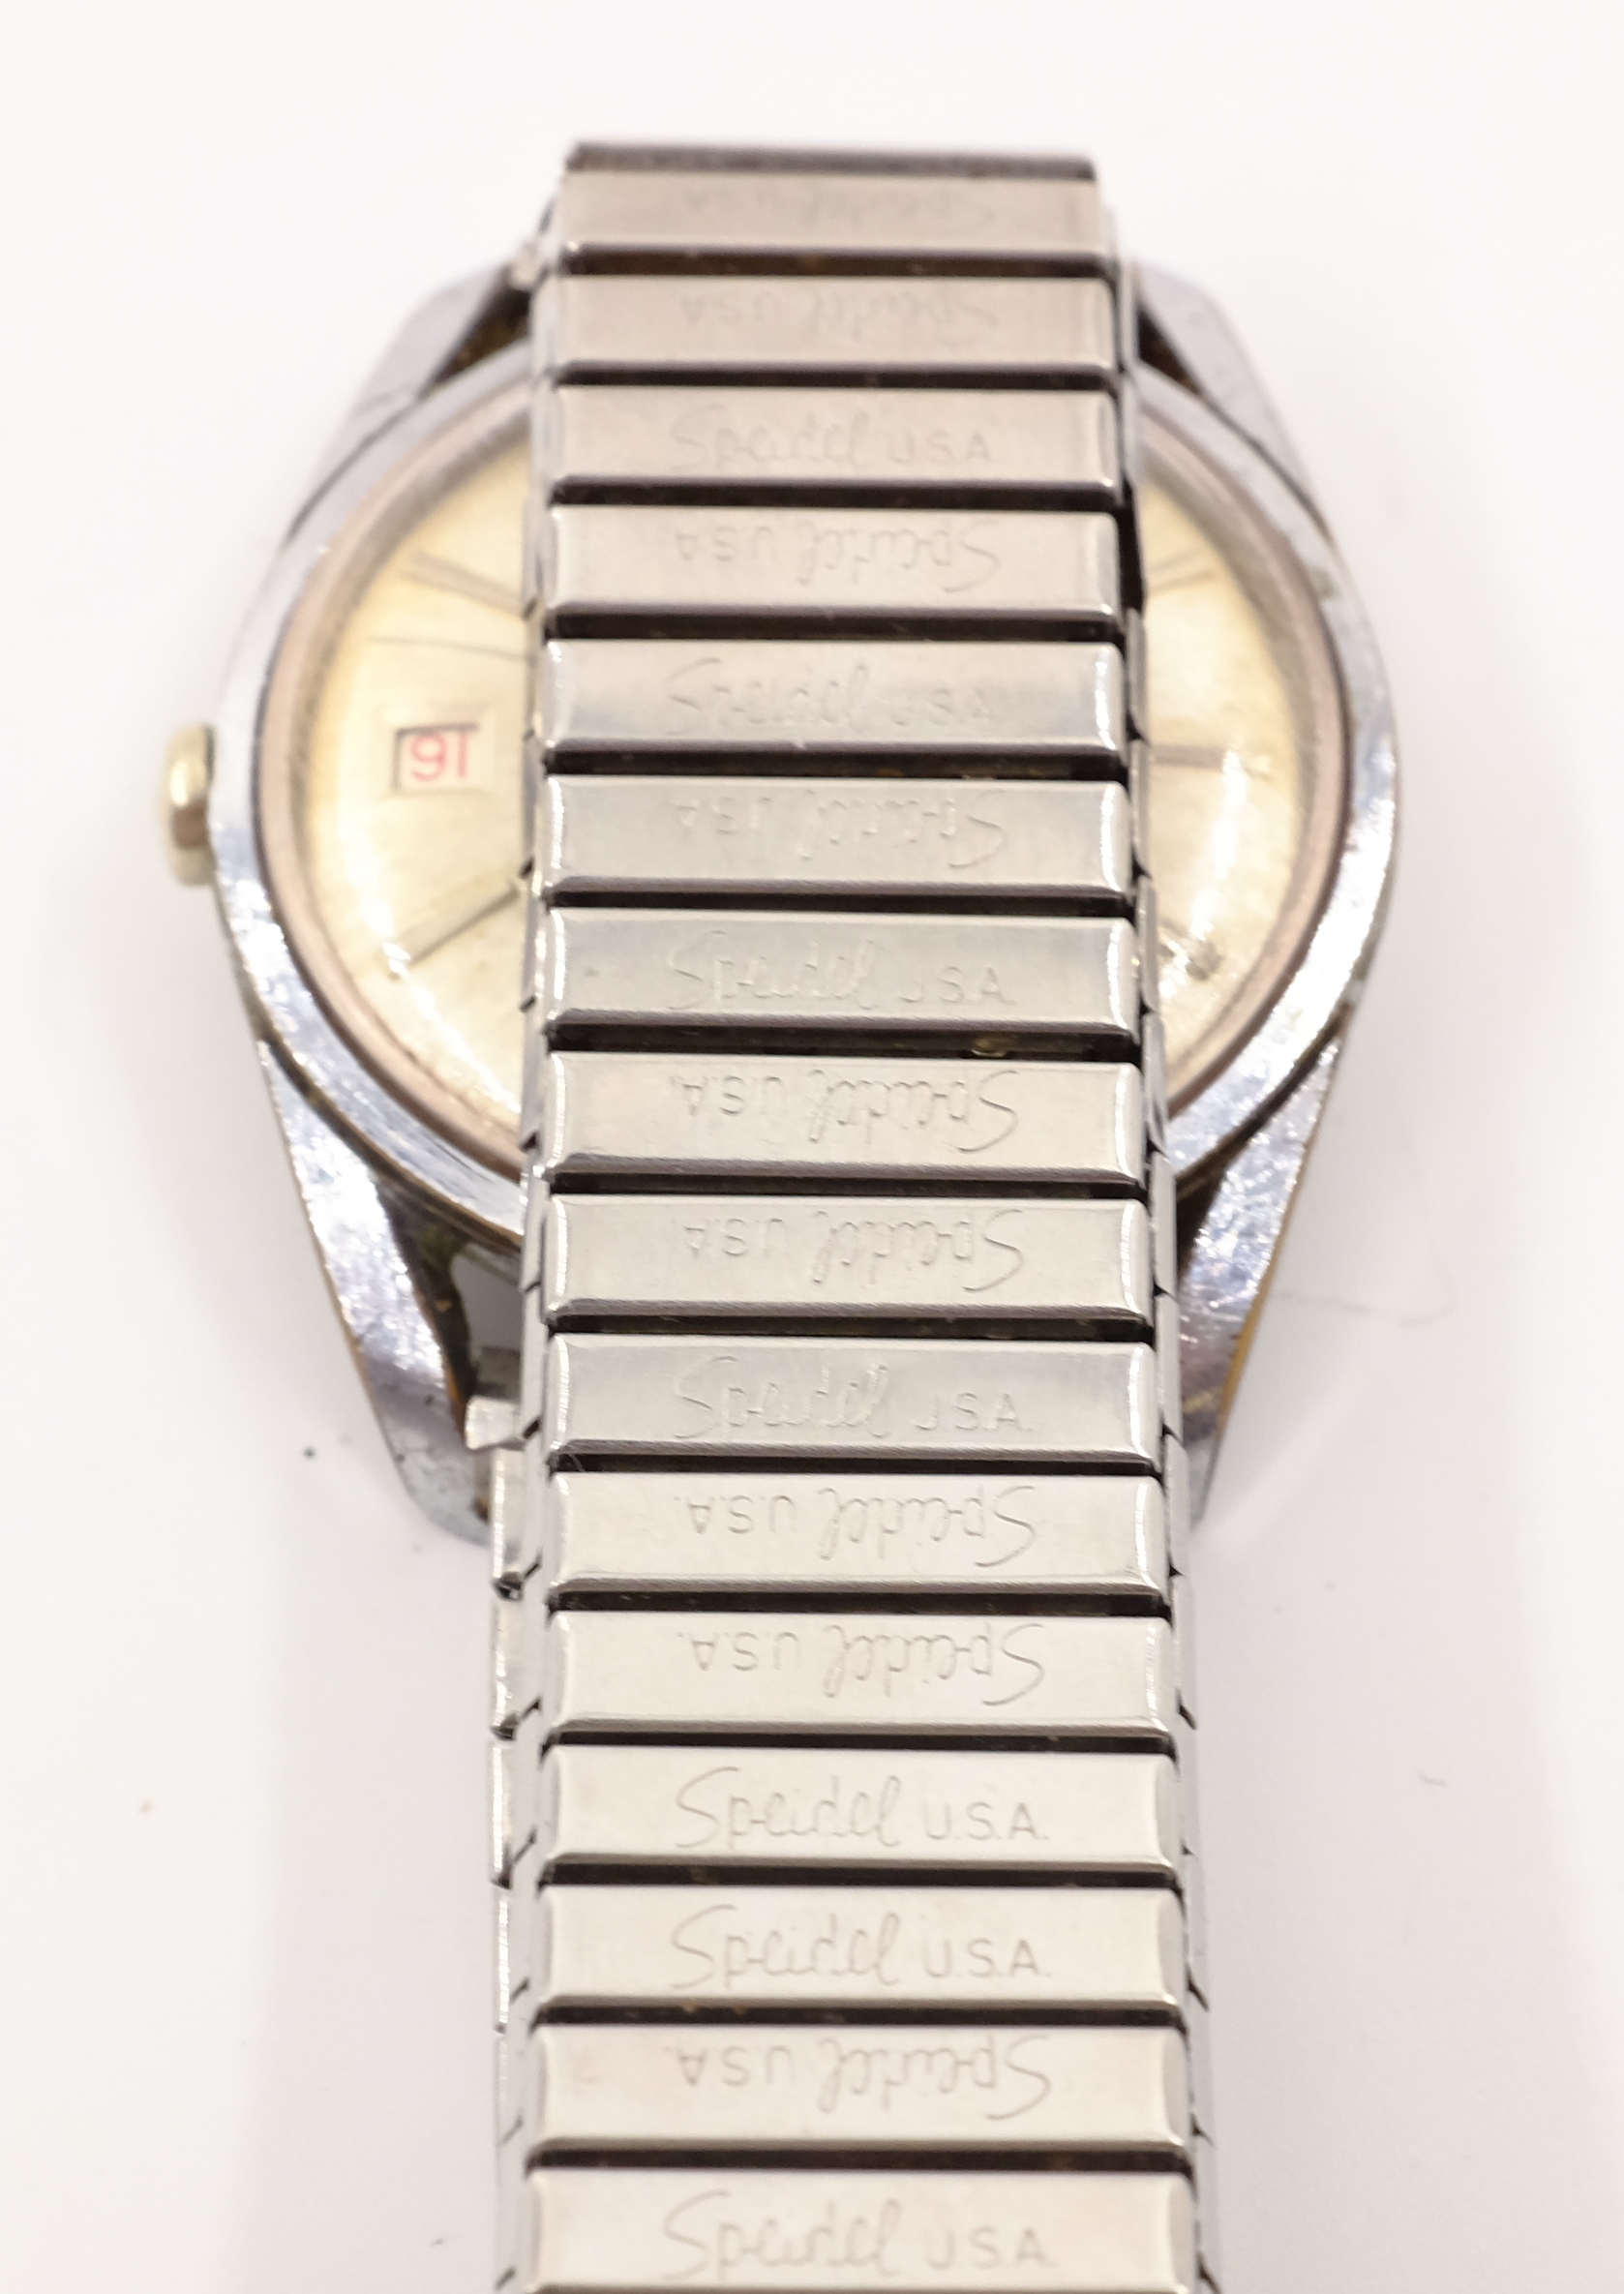 Bucherer 25 Jewels Automatic wristwatch no 33 66 on expanding bracelet - Image 3 of 3